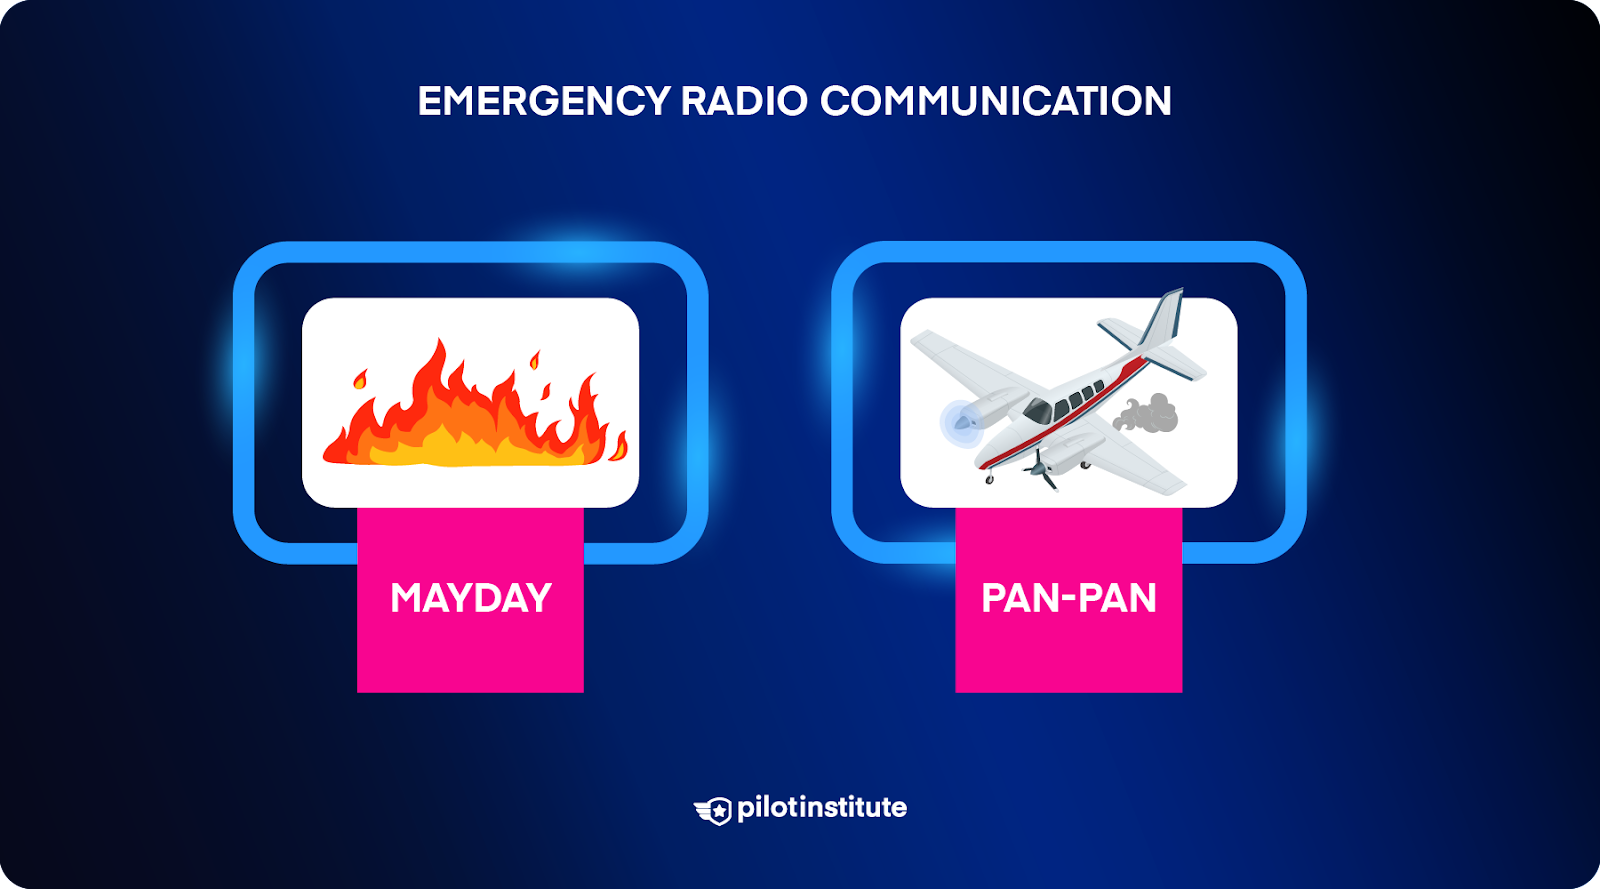 Emergency Radio Communication infographic.